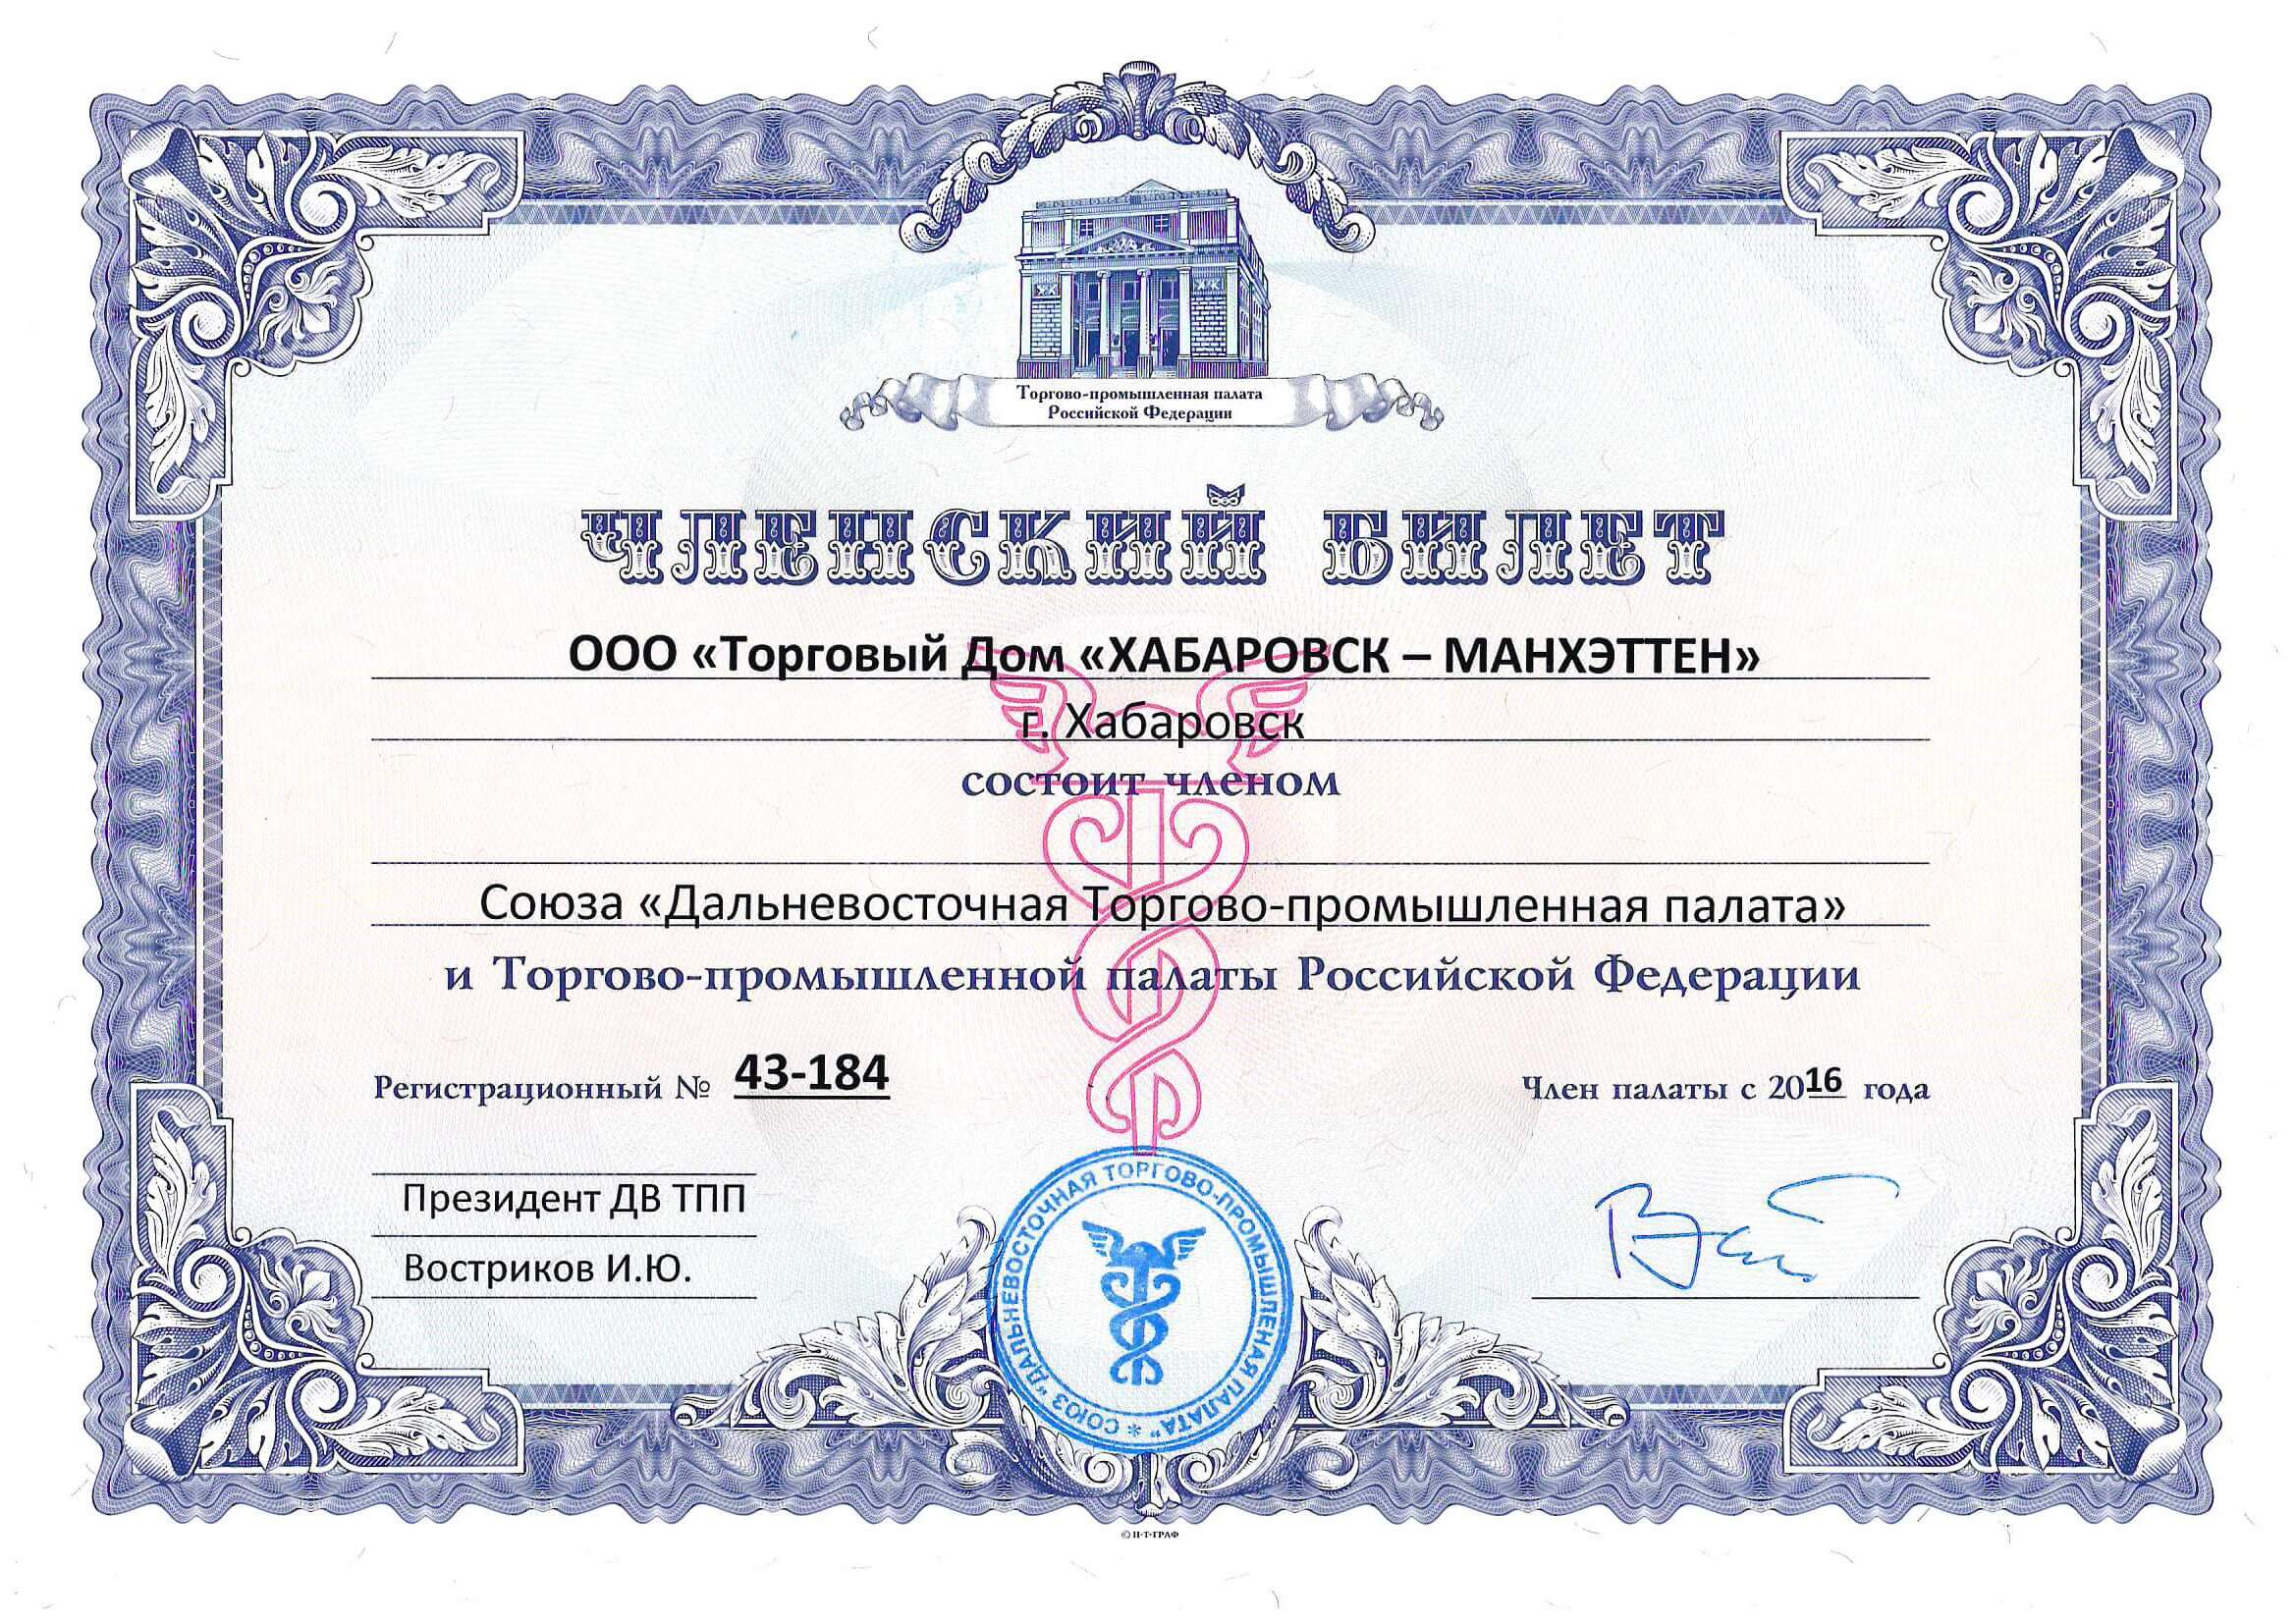 Membership card - Khabarovsk-Manhattan Trading House LLC